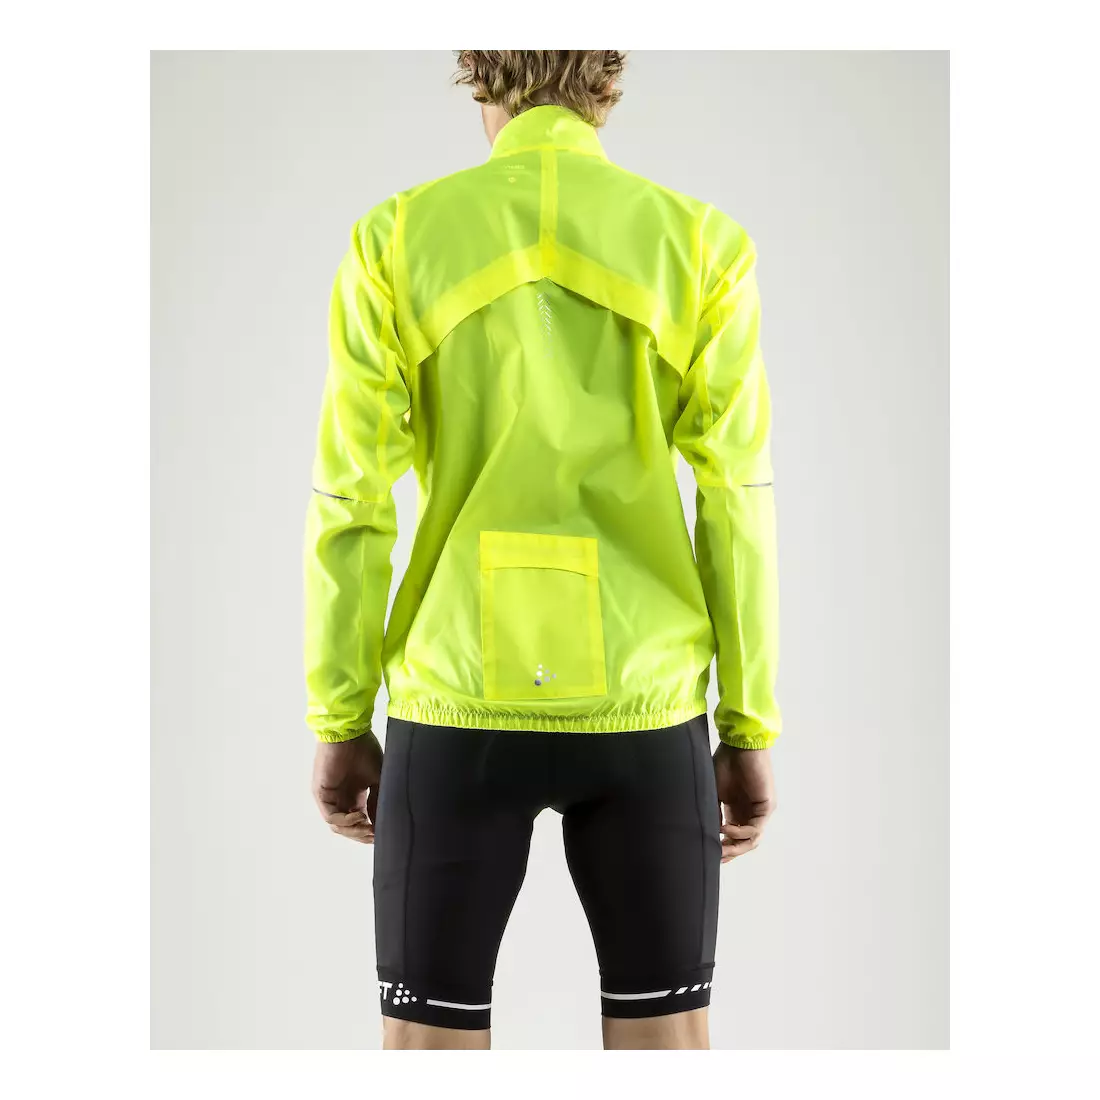 CRAFT Mist Wind JKT pánská cyklistická bunda, větrovka 1906093-851999, fluor